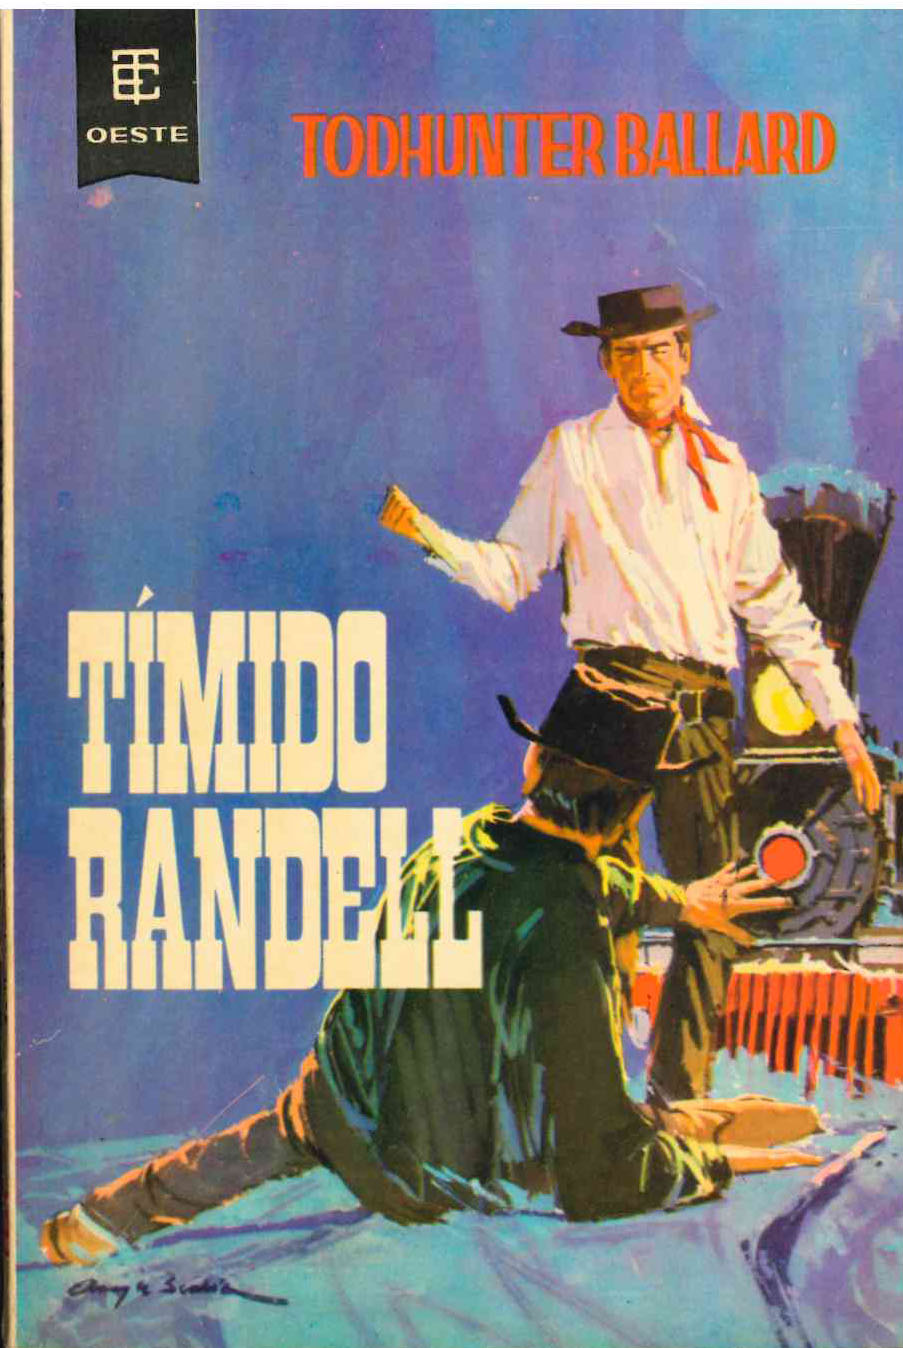 Toray Oeste nº 97. Tímido Randell por Todhunter Ballard. Toray 1963